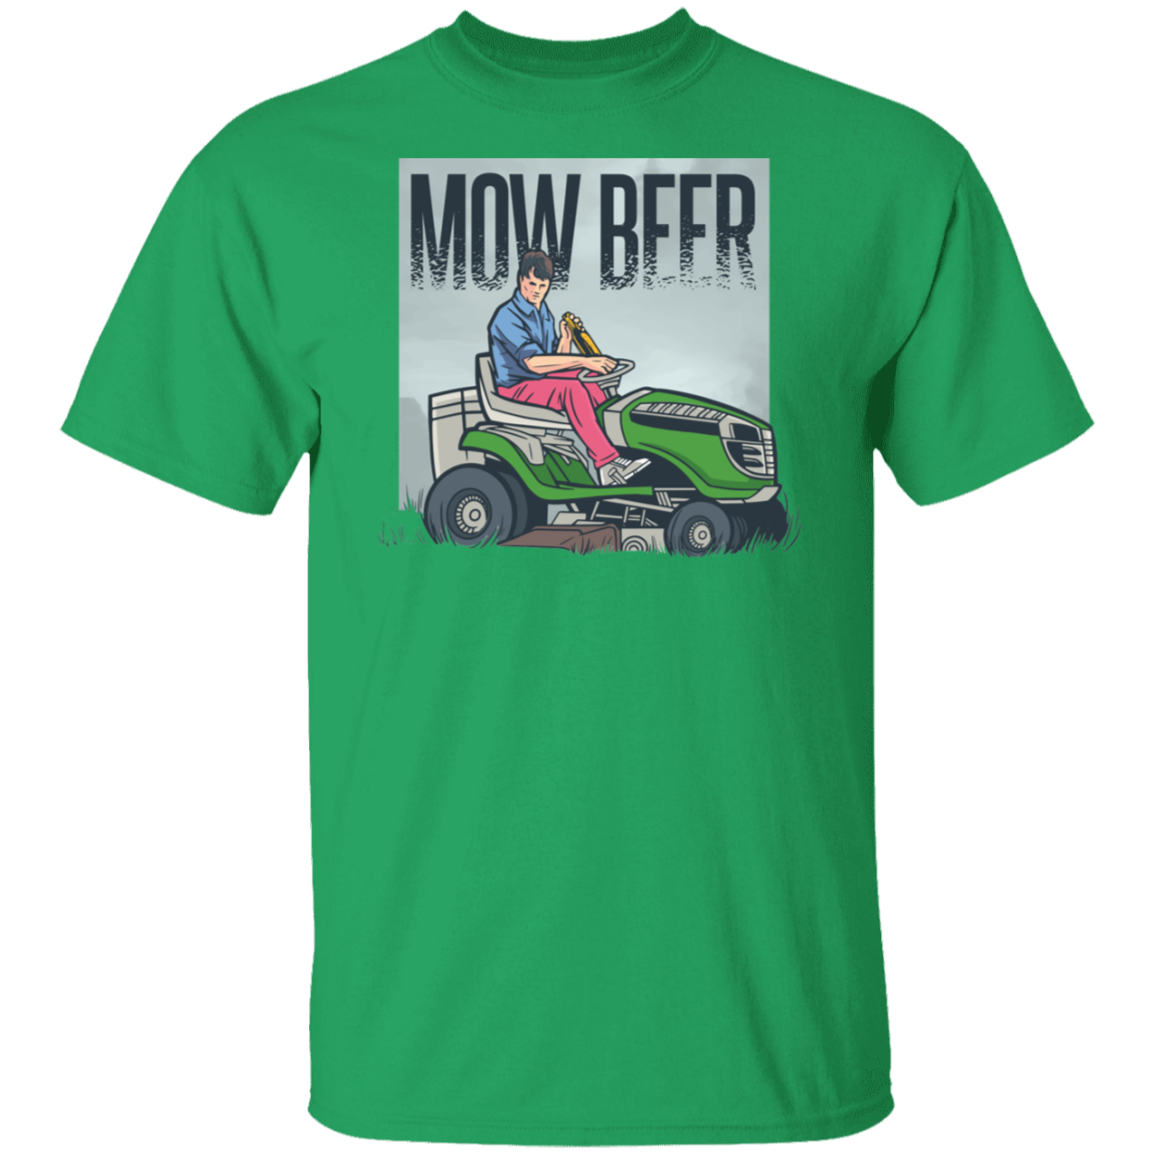 Mow Beer T-Shirt